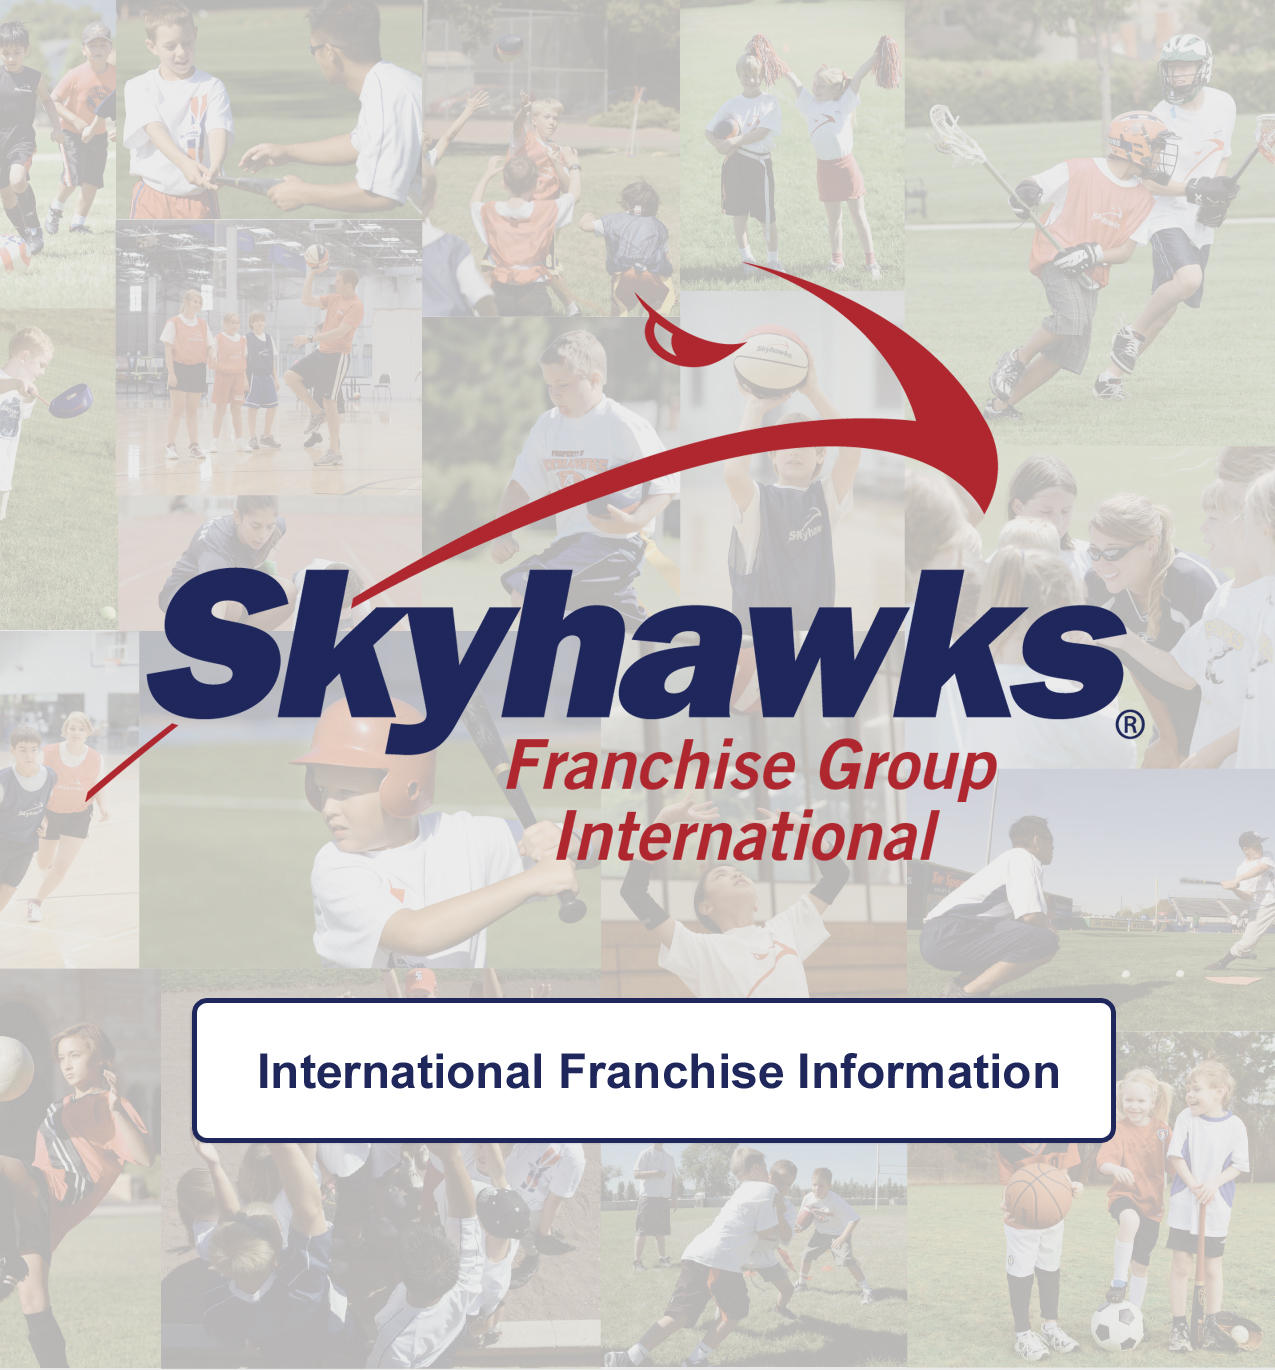 Skyhawks Franchise Group International